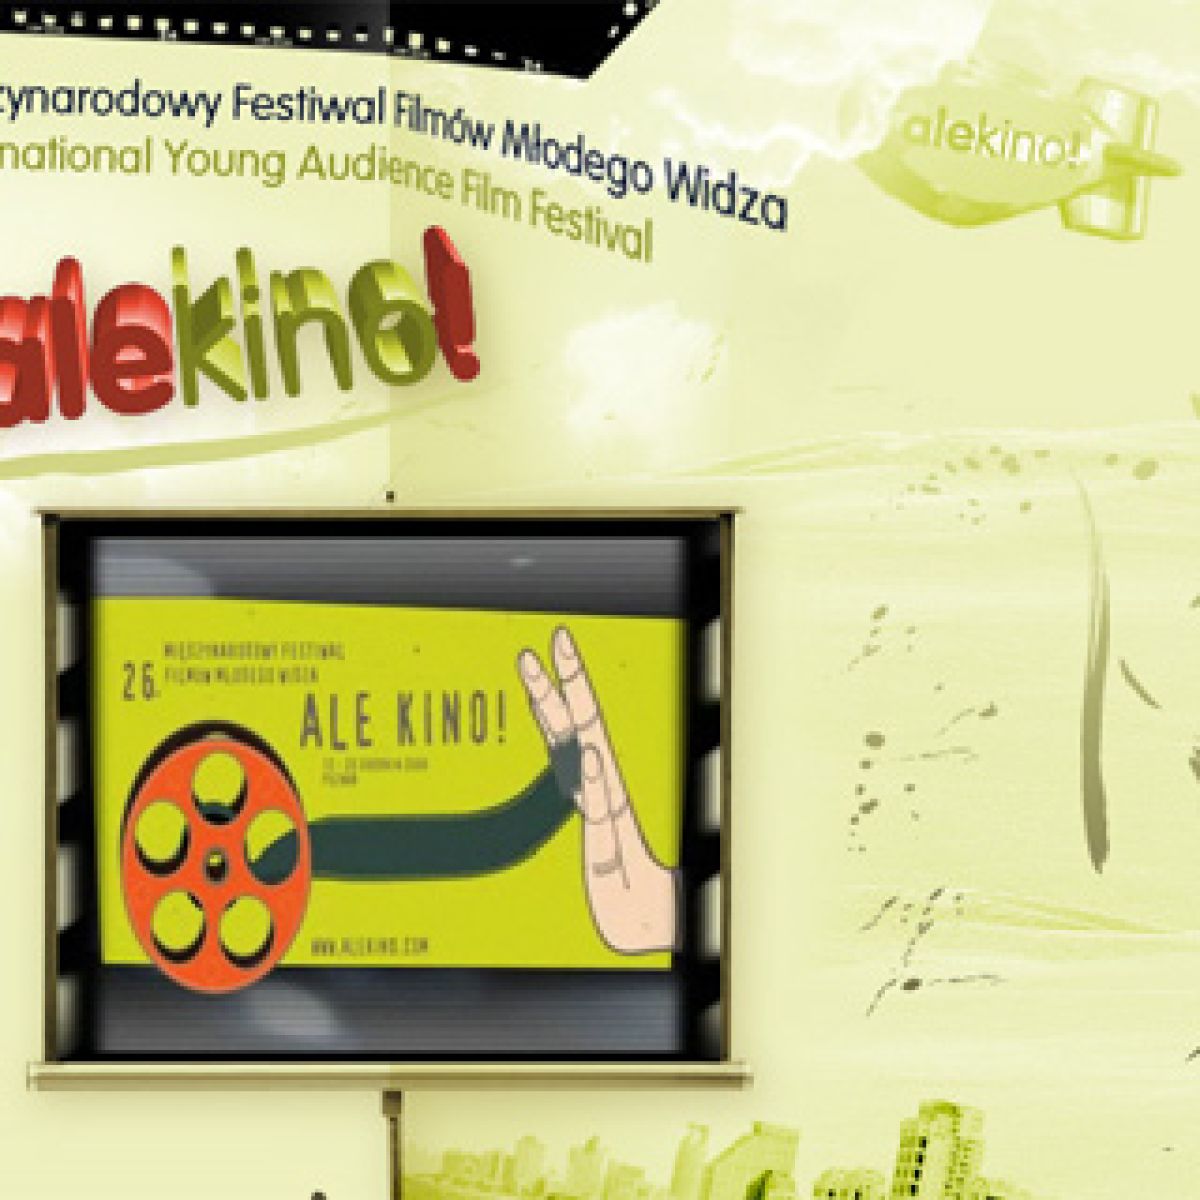 Festiwal Ale Kino!